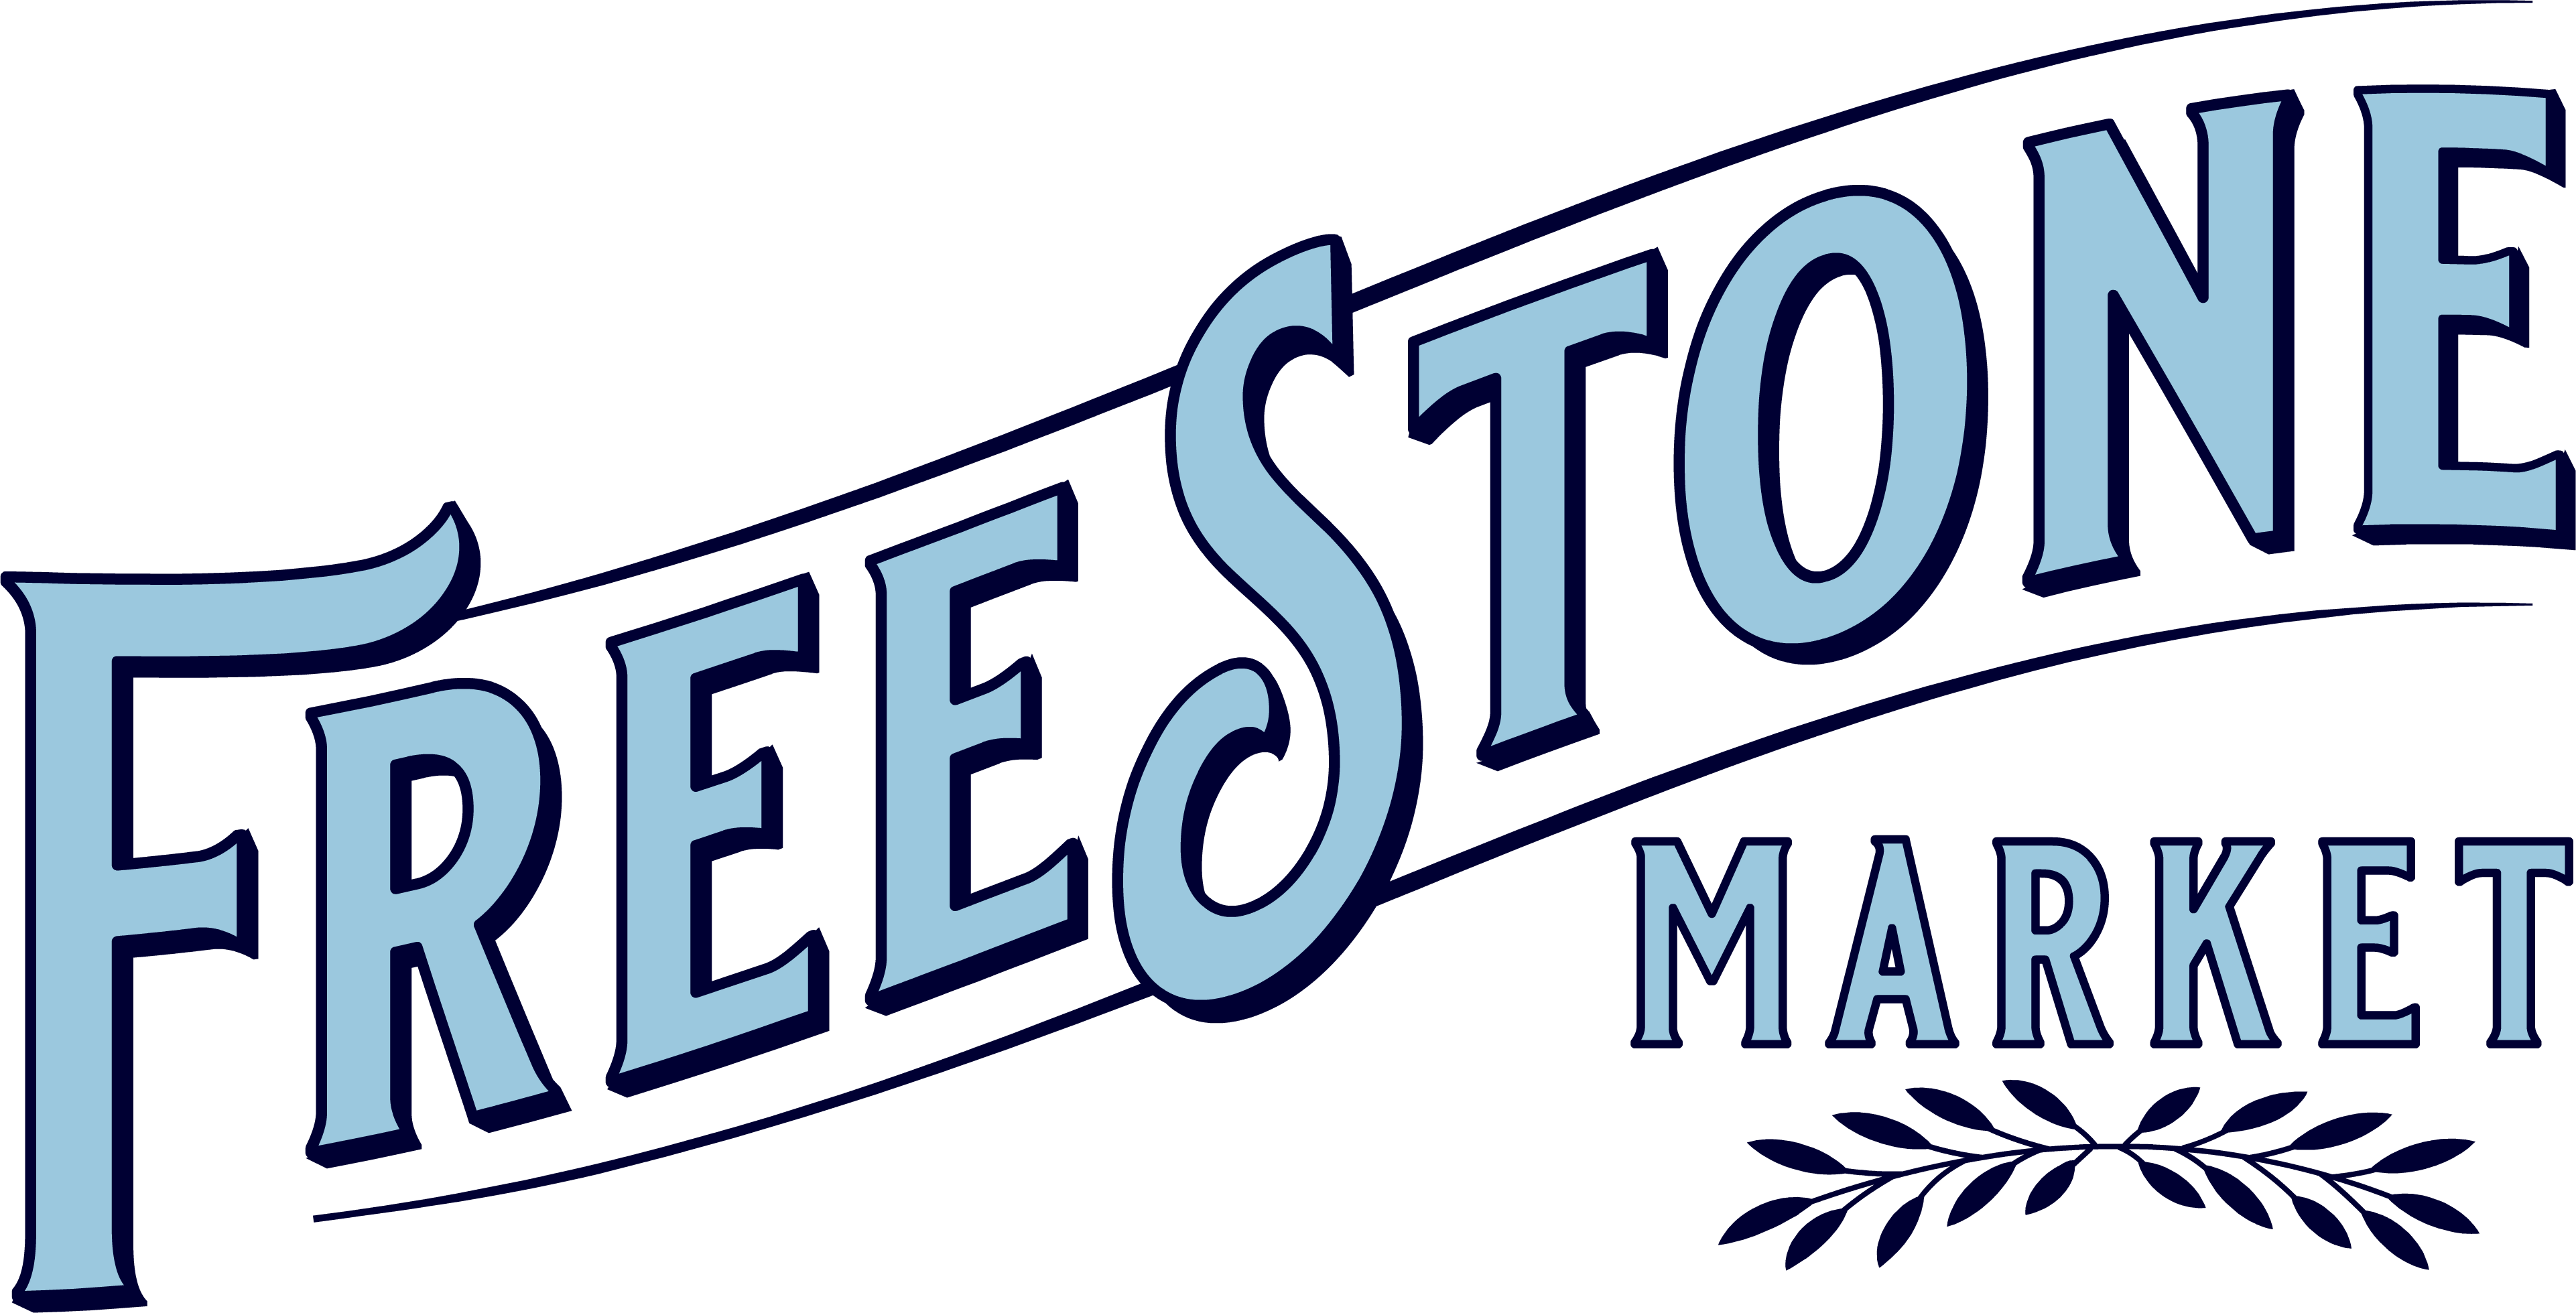 Freestone Market